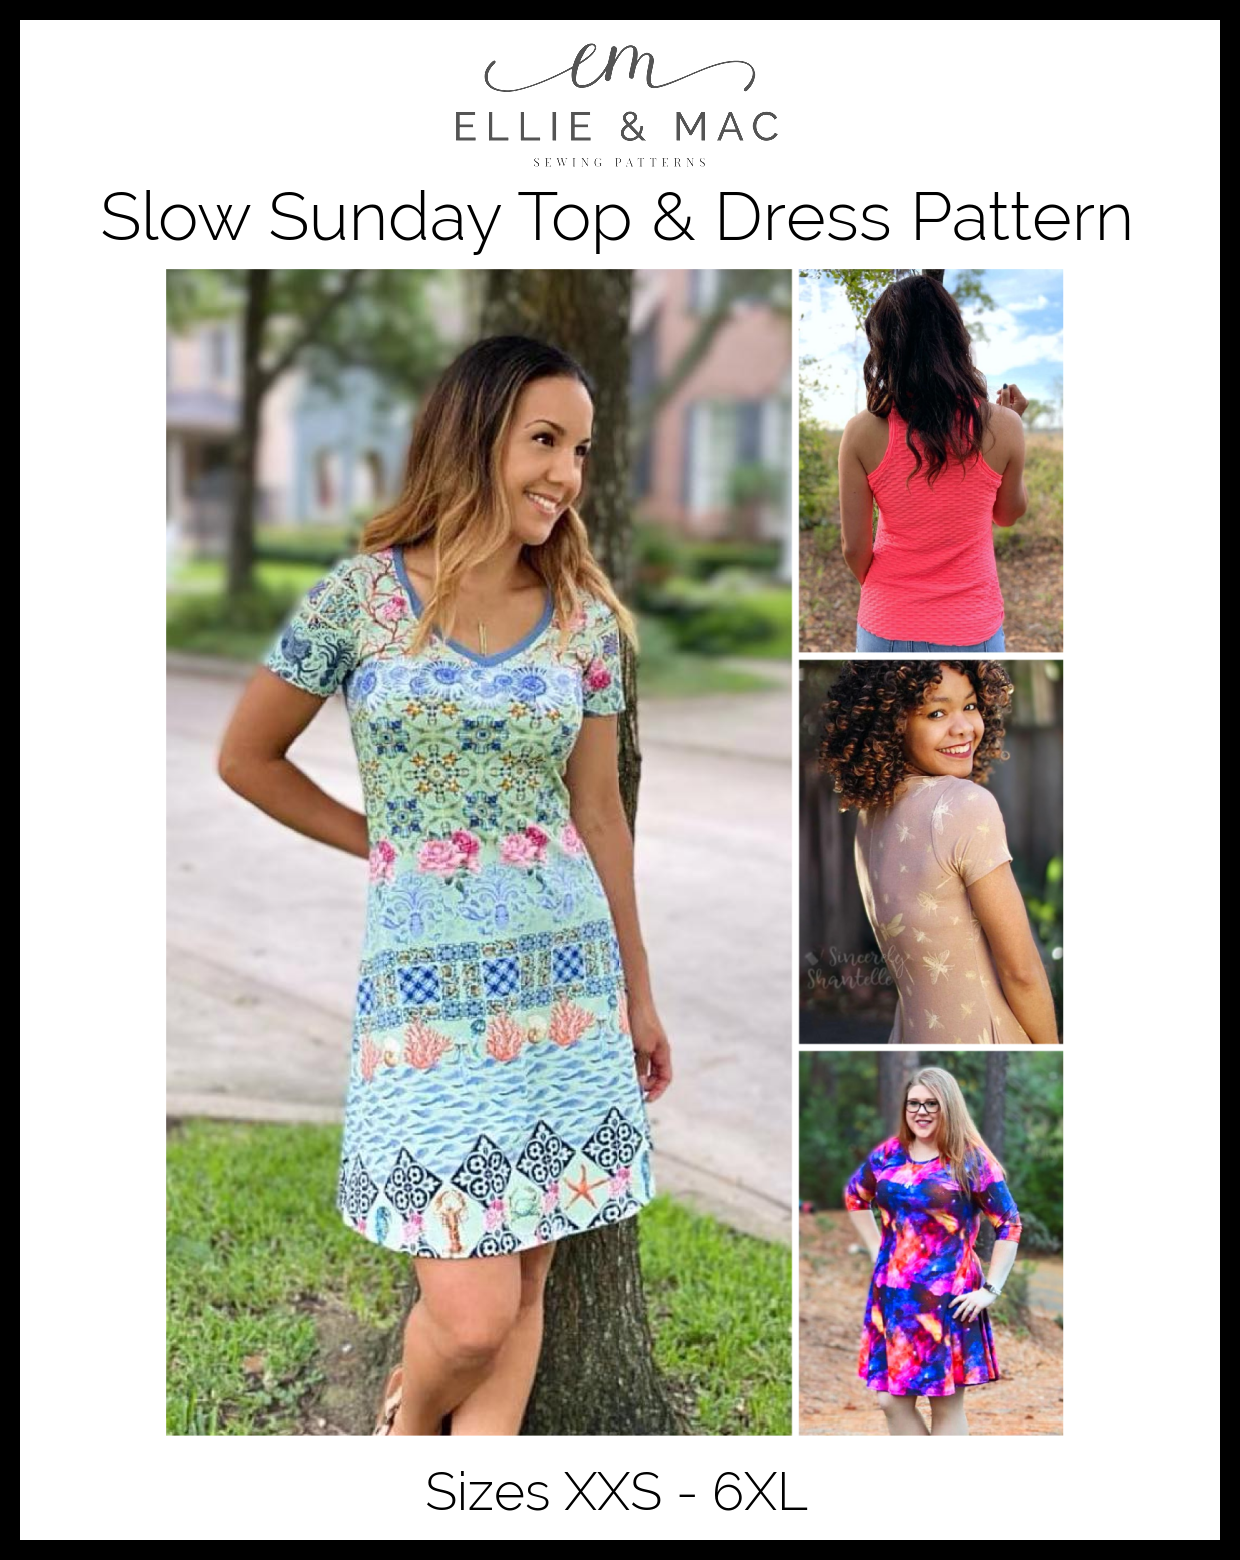 Slow Sunday Top & Dress Pattern